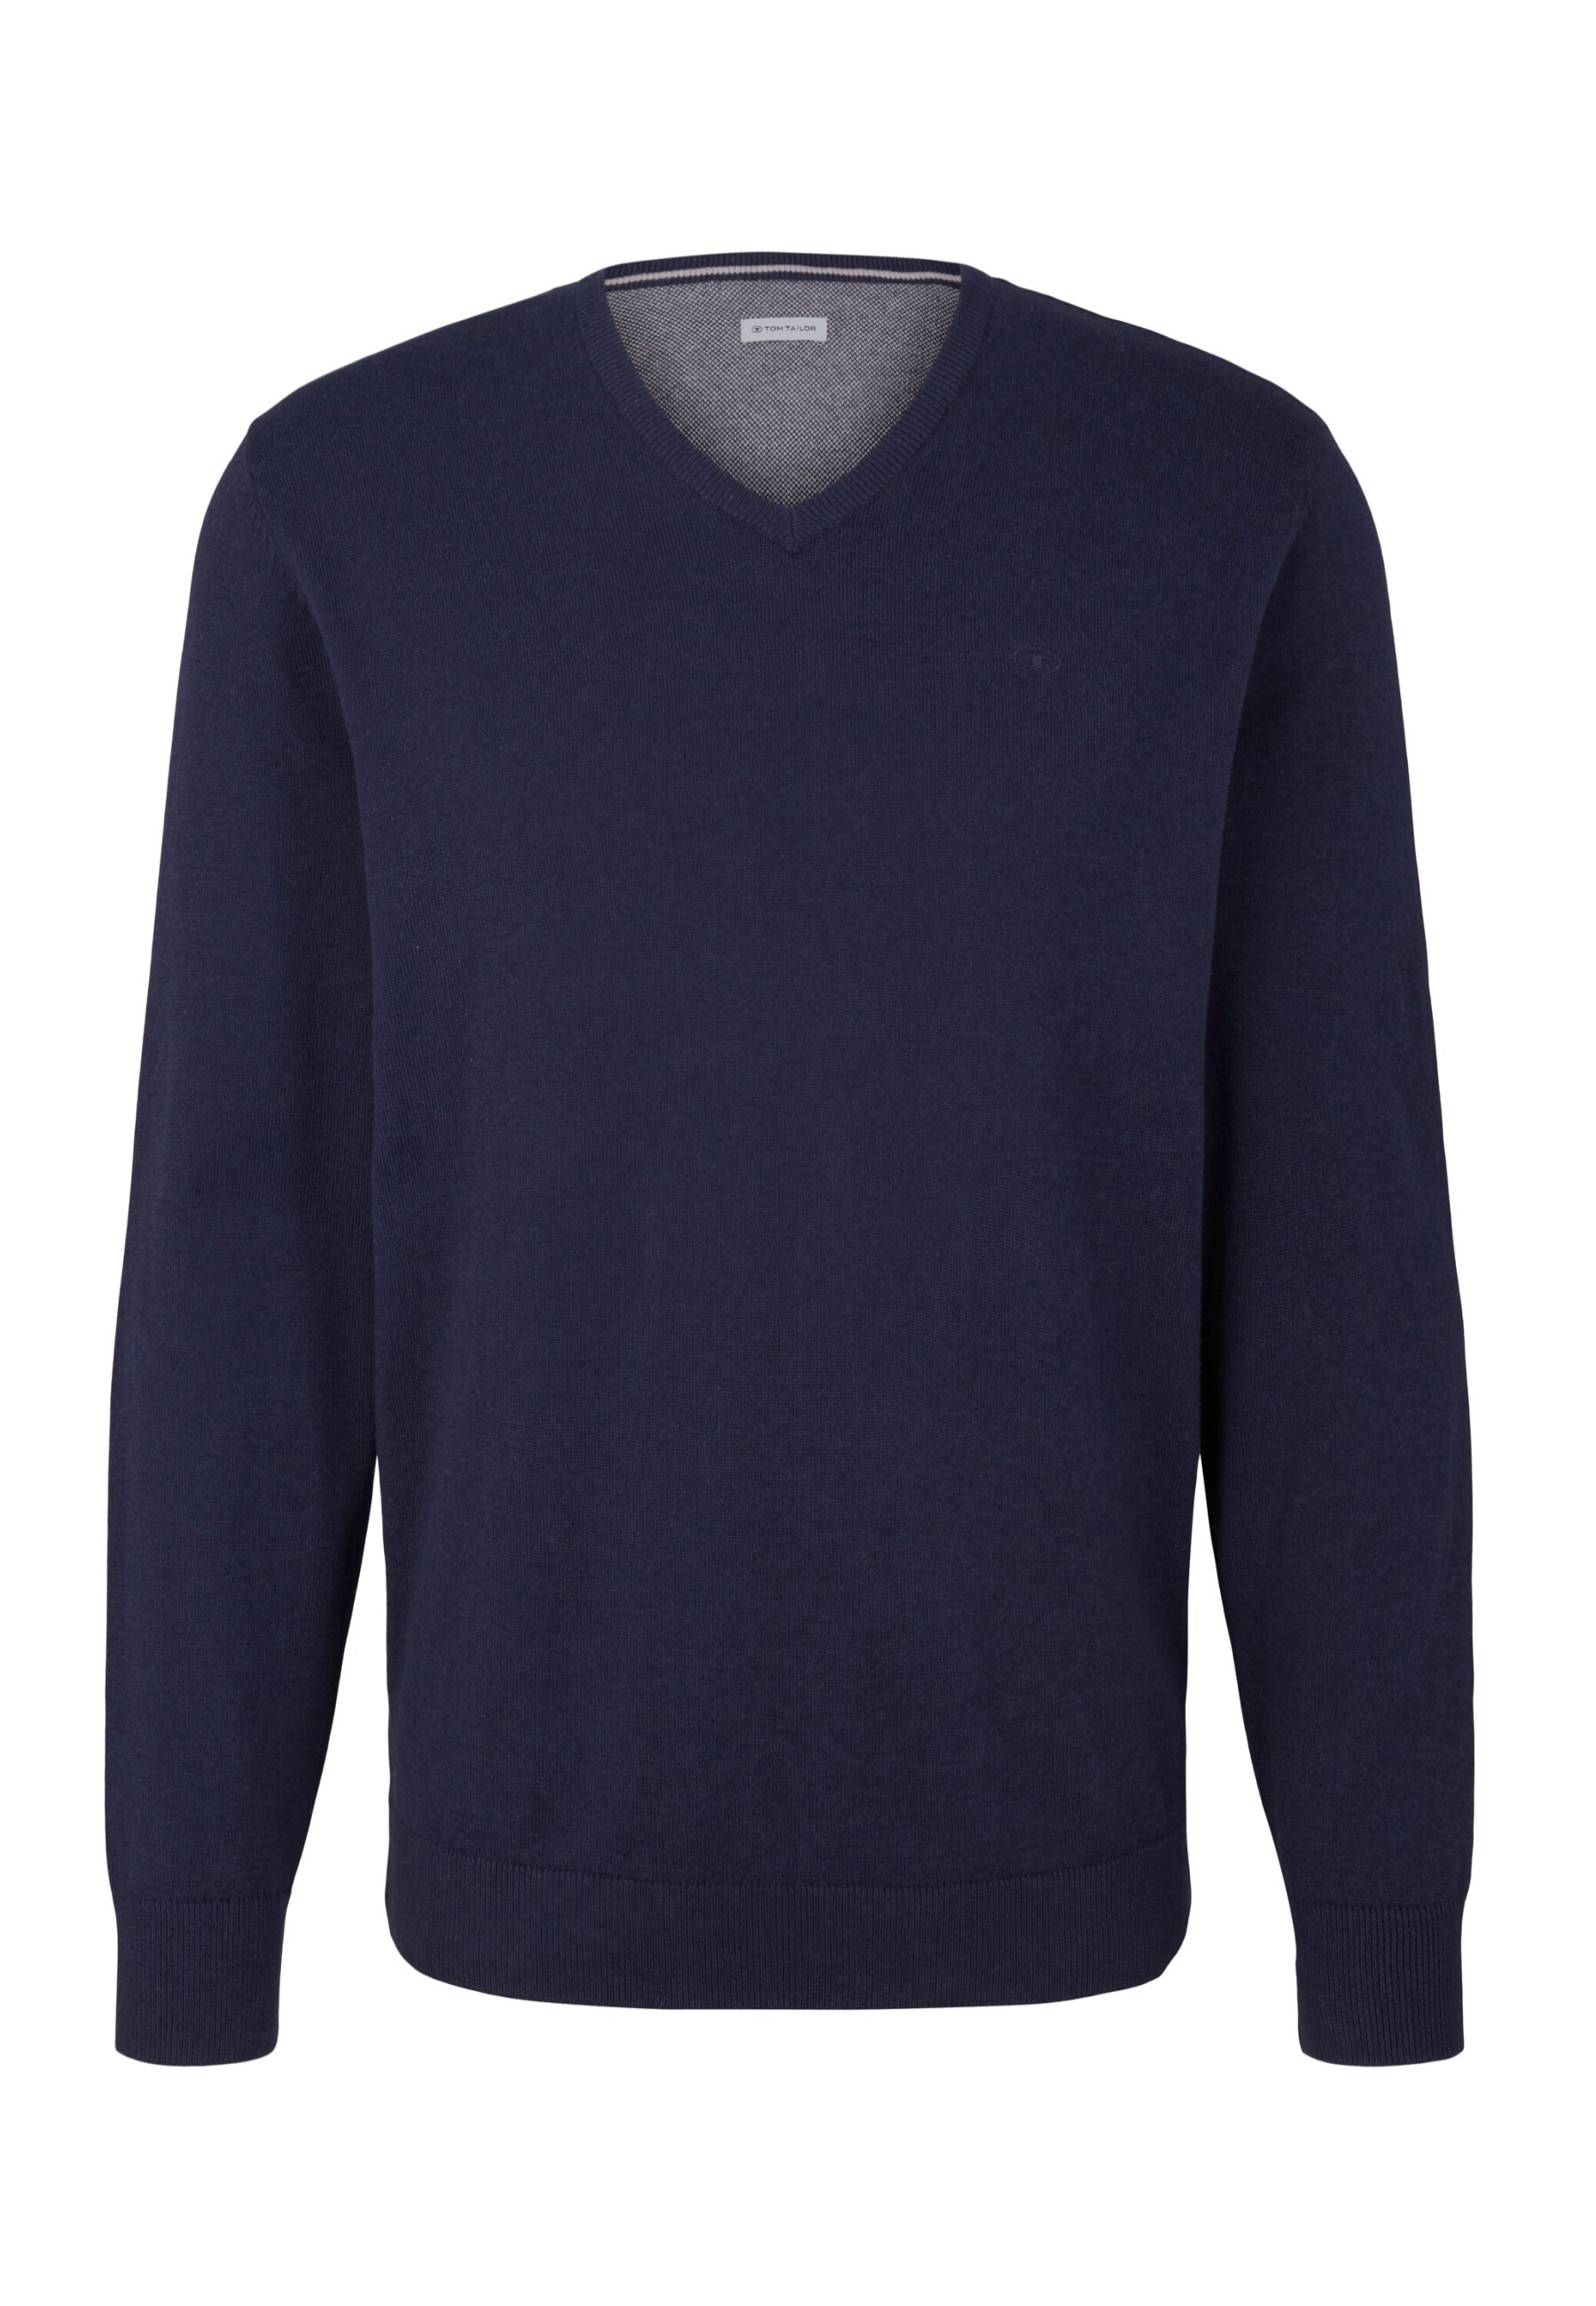 Пуловер Tom Tailor, синий пуловер tom tailor размер s синий